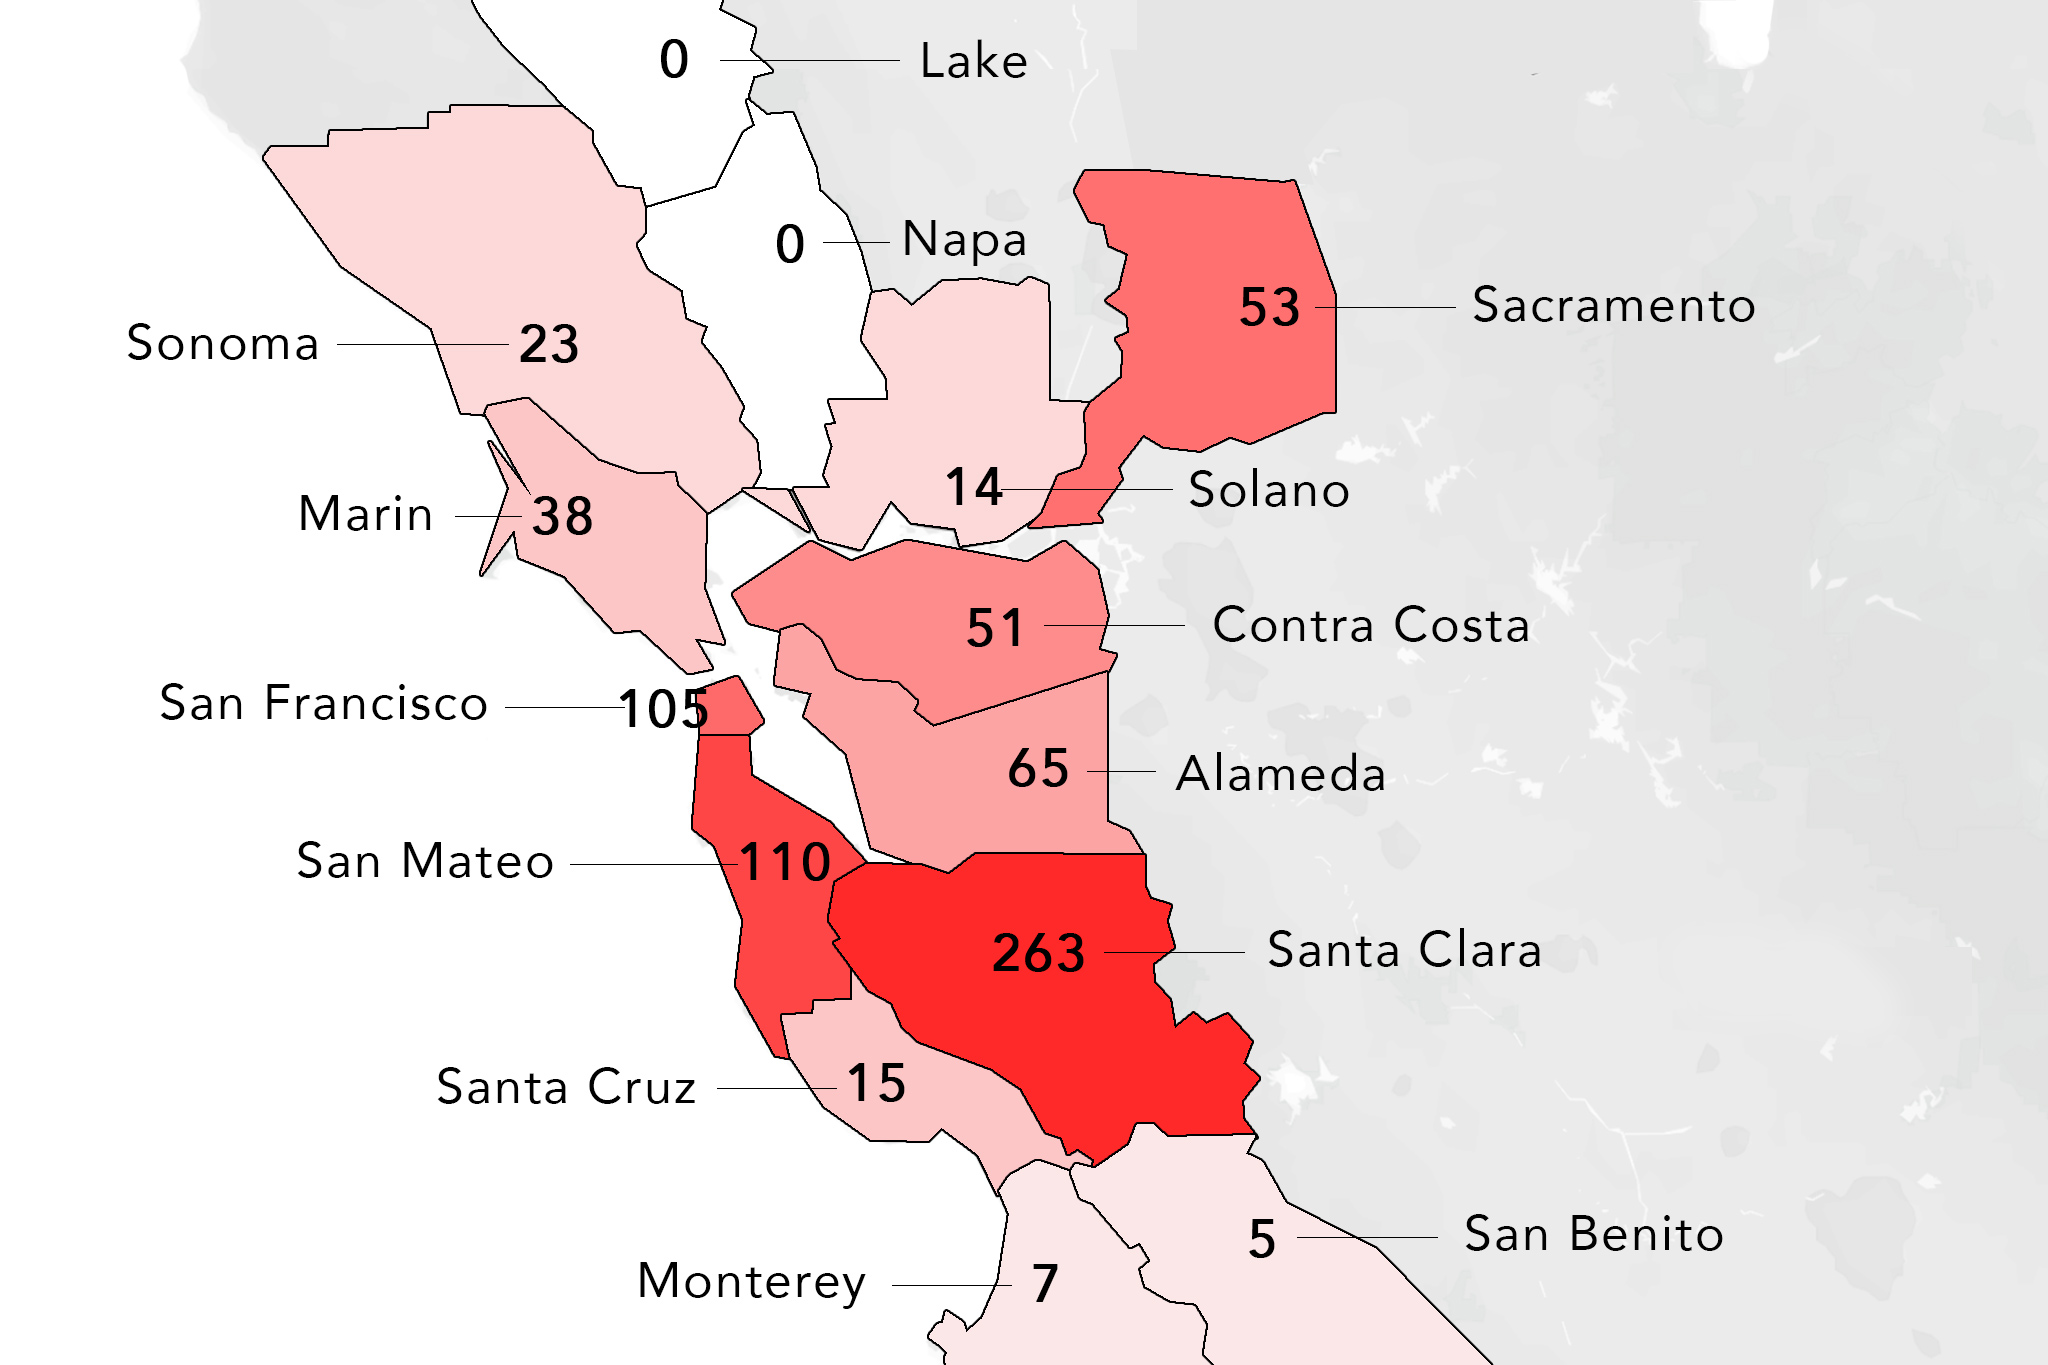 Coronavirus updates: San Francisco case count jumps to 105